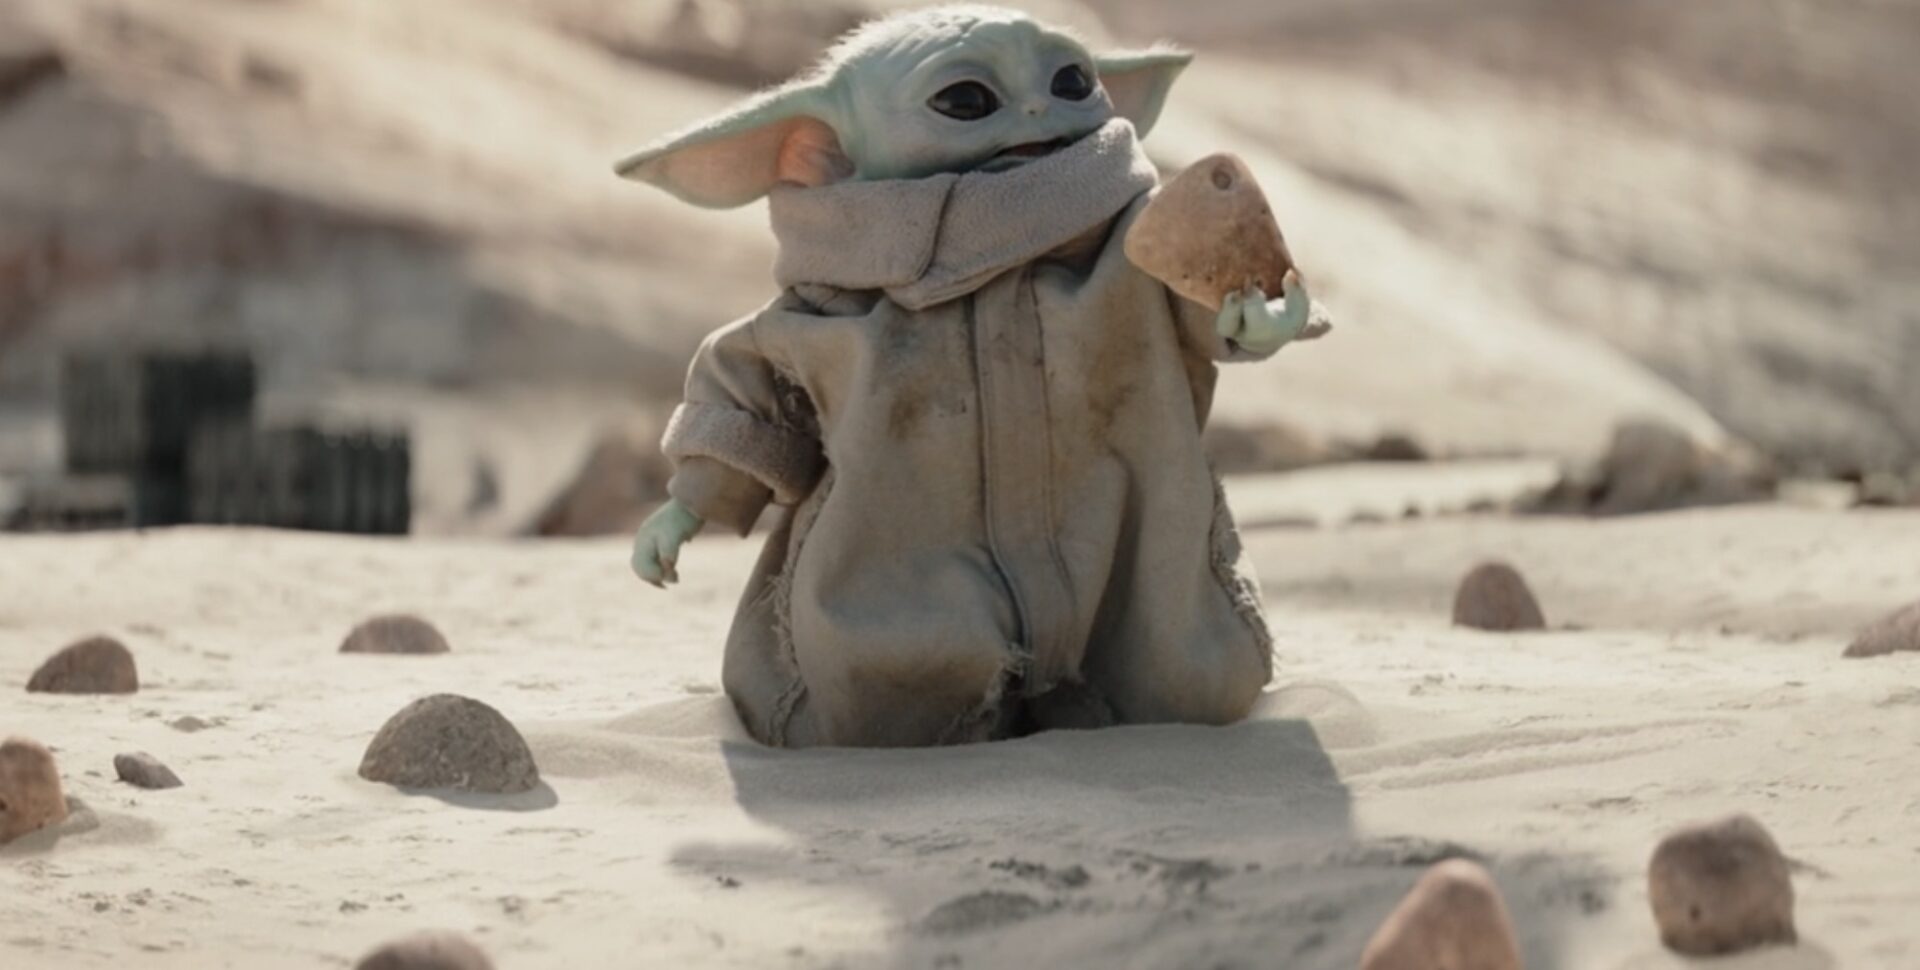 Baby Yoda Is Headed to the Big Screen in The Mandalorian and Grogu - Reactor